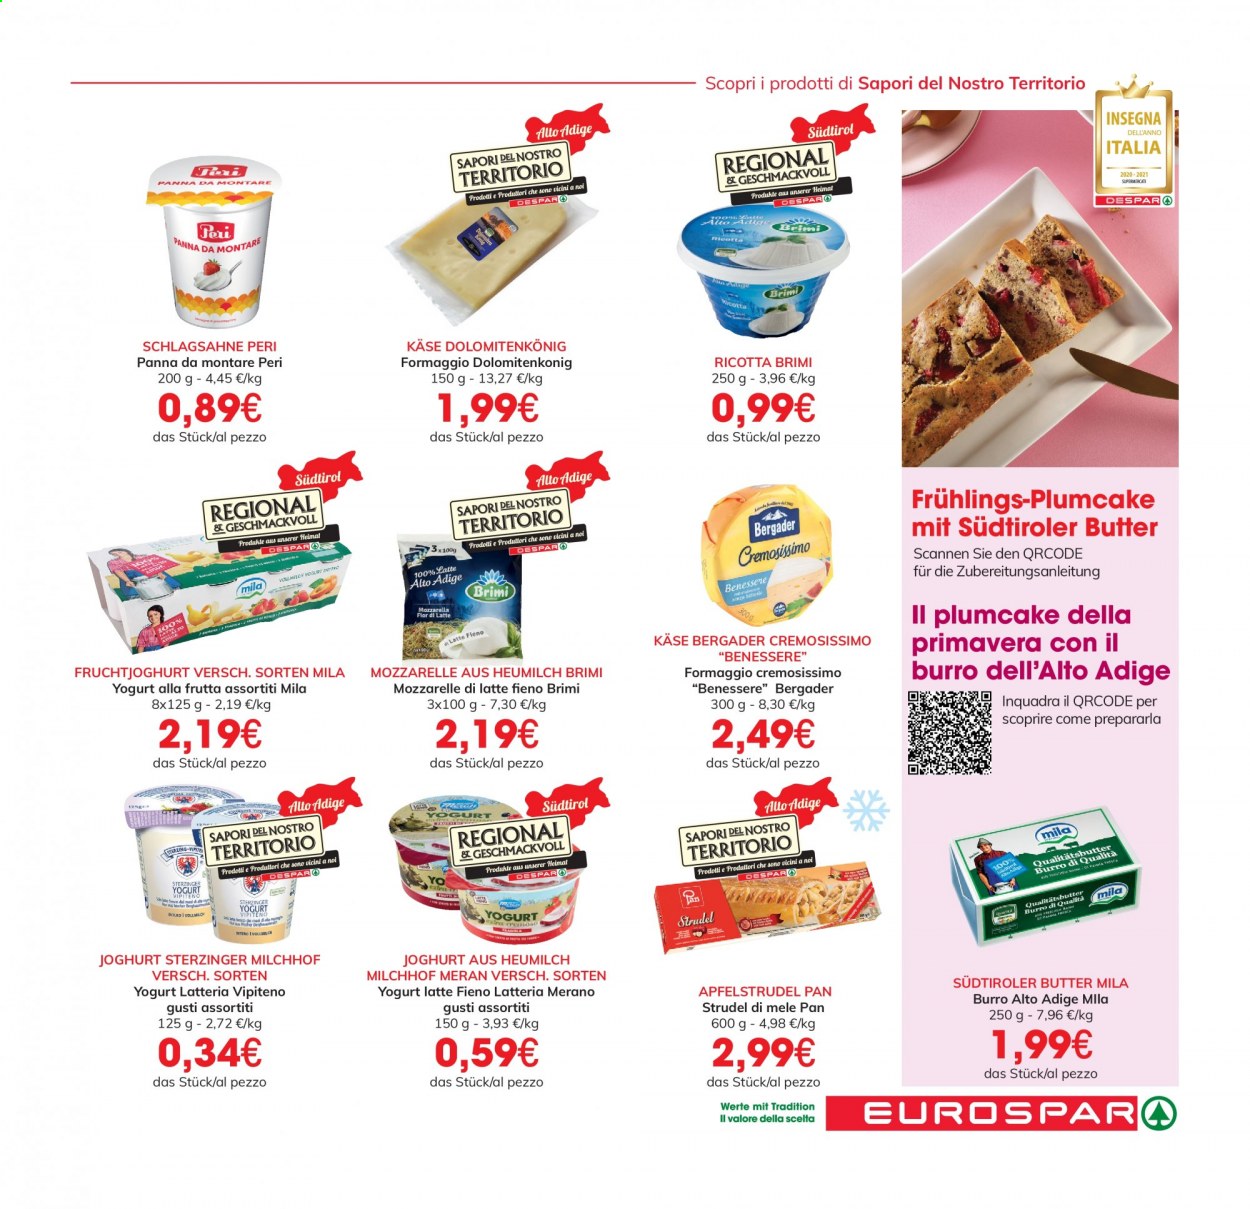 thumbnail - Volantino Eurospar - 22/4/2021 - 5/5/2021 - Prodotti in offerta - plumcake, strudel, formaggio, ricotta, yogurt, Latteria Vipiteno, latte, panna, panna da montare. Pagina 5.